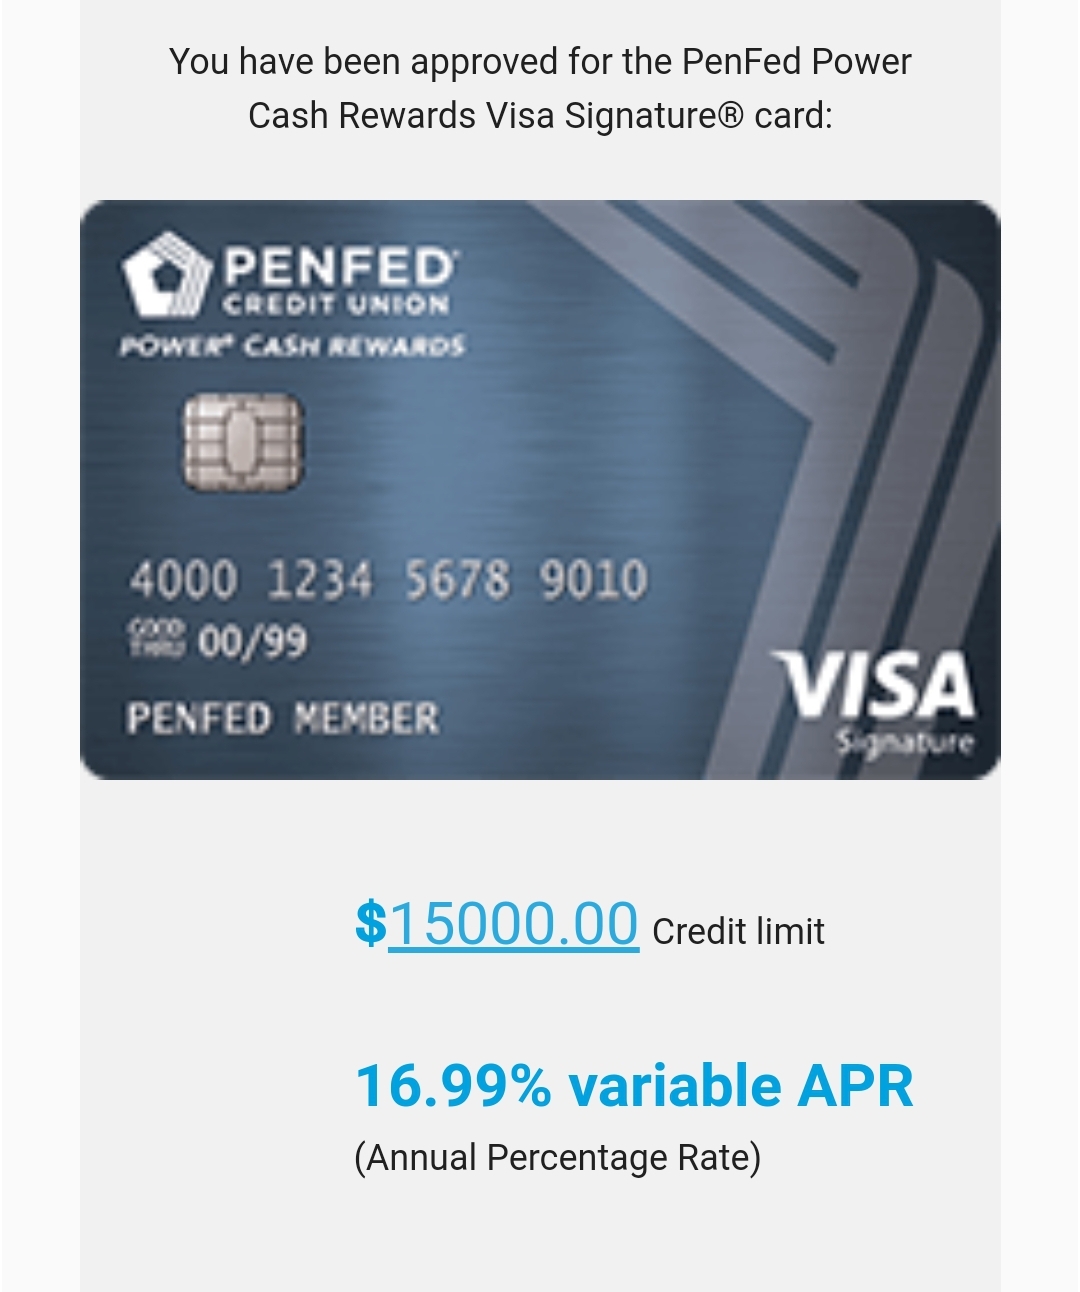 penfed-power-cash-rewards-visa-signature-card-ap-myfico-forums